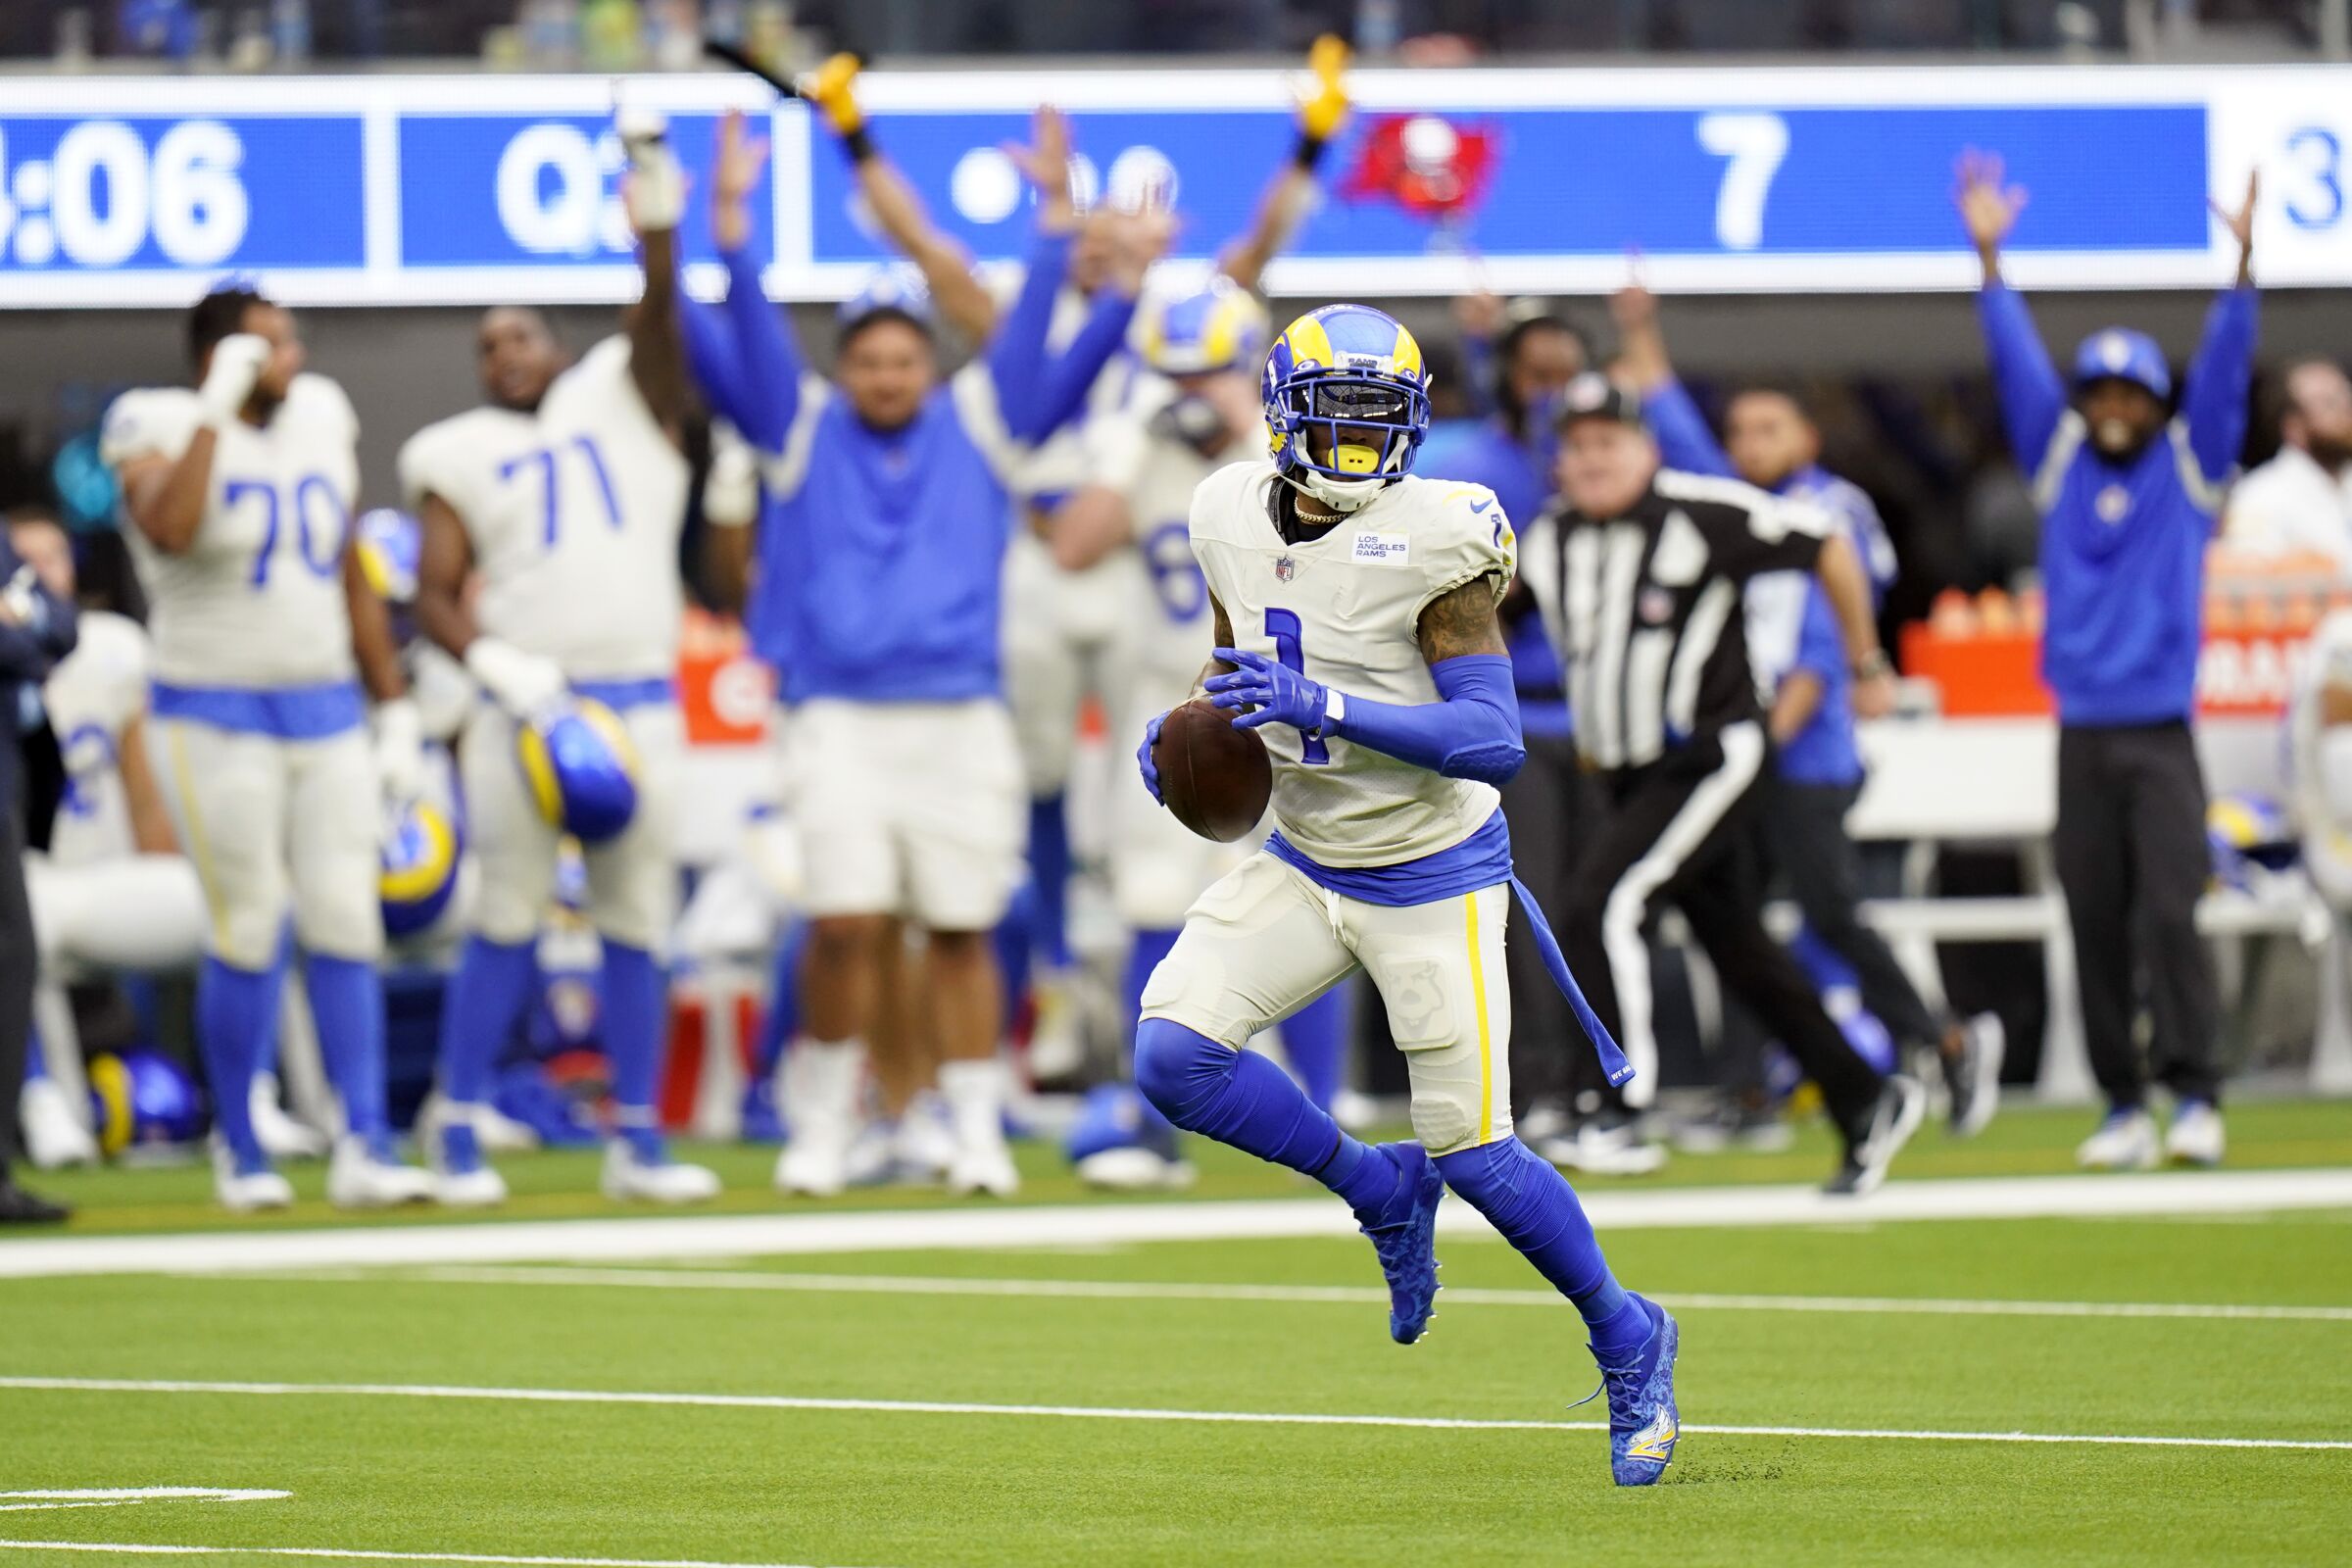 Rams wide receiver DeSean Jackson scores on a 75-yard touchdown reception.